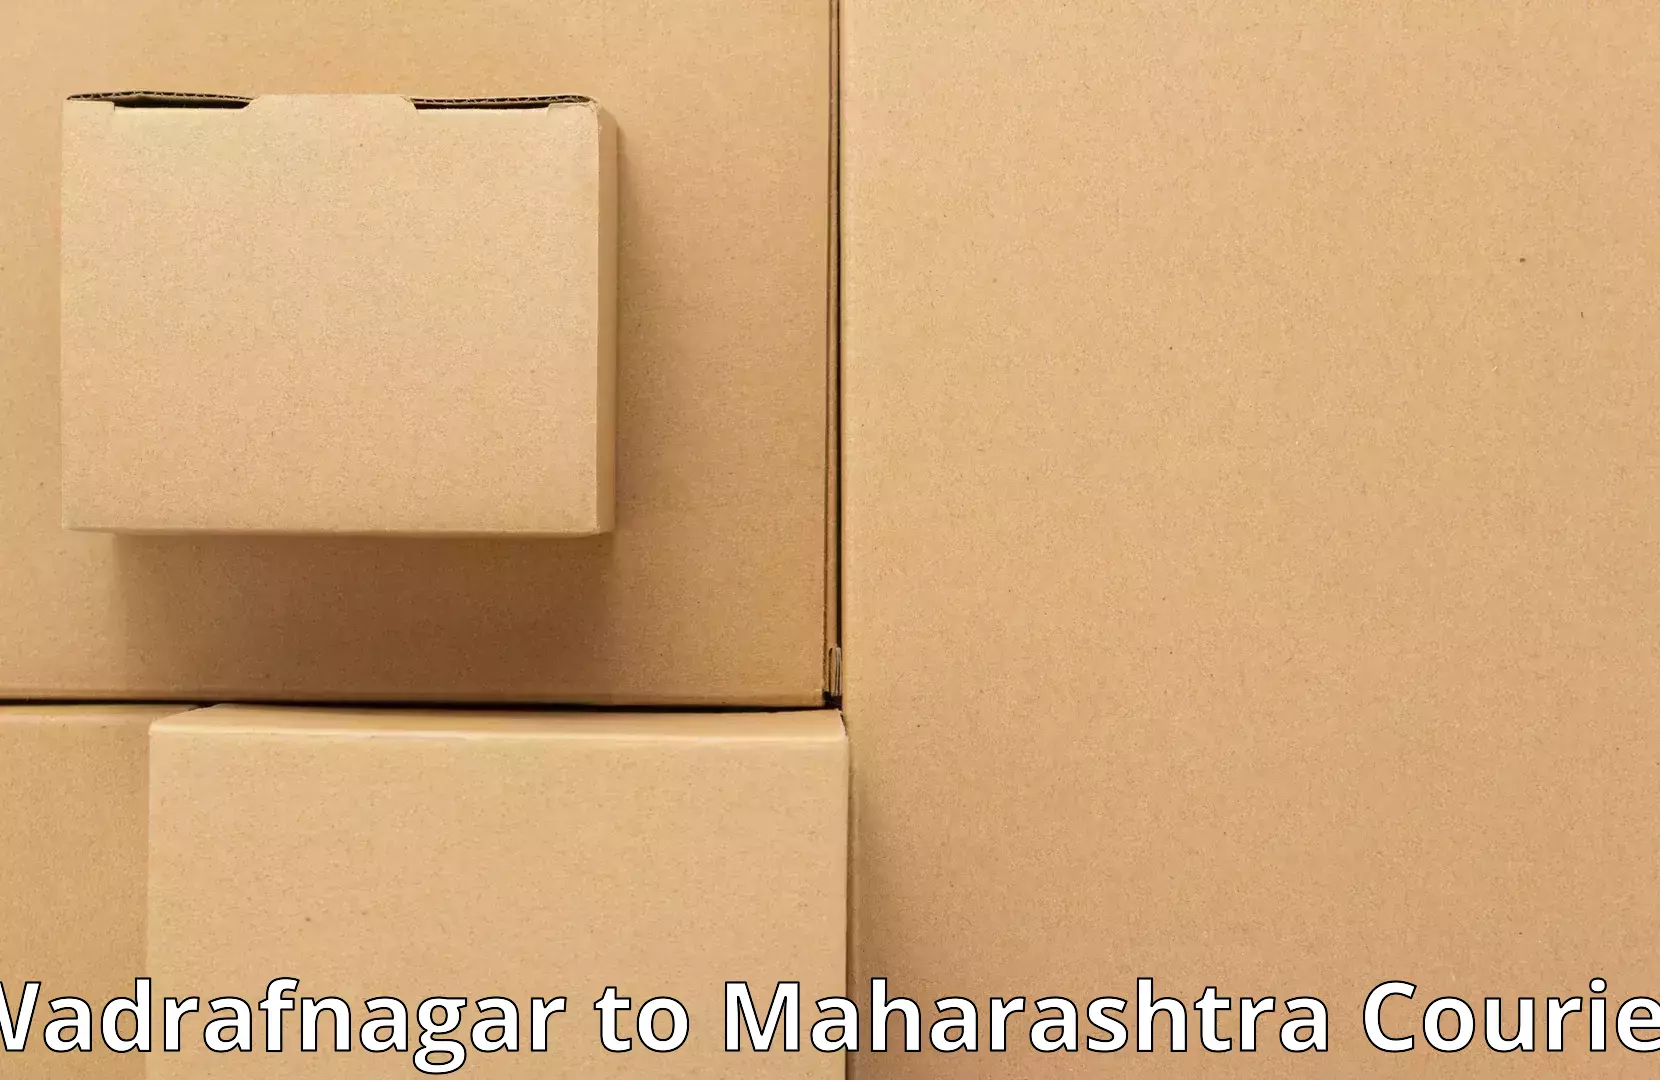 Hassle-free relocation Wadrafnagar to Vadgaon